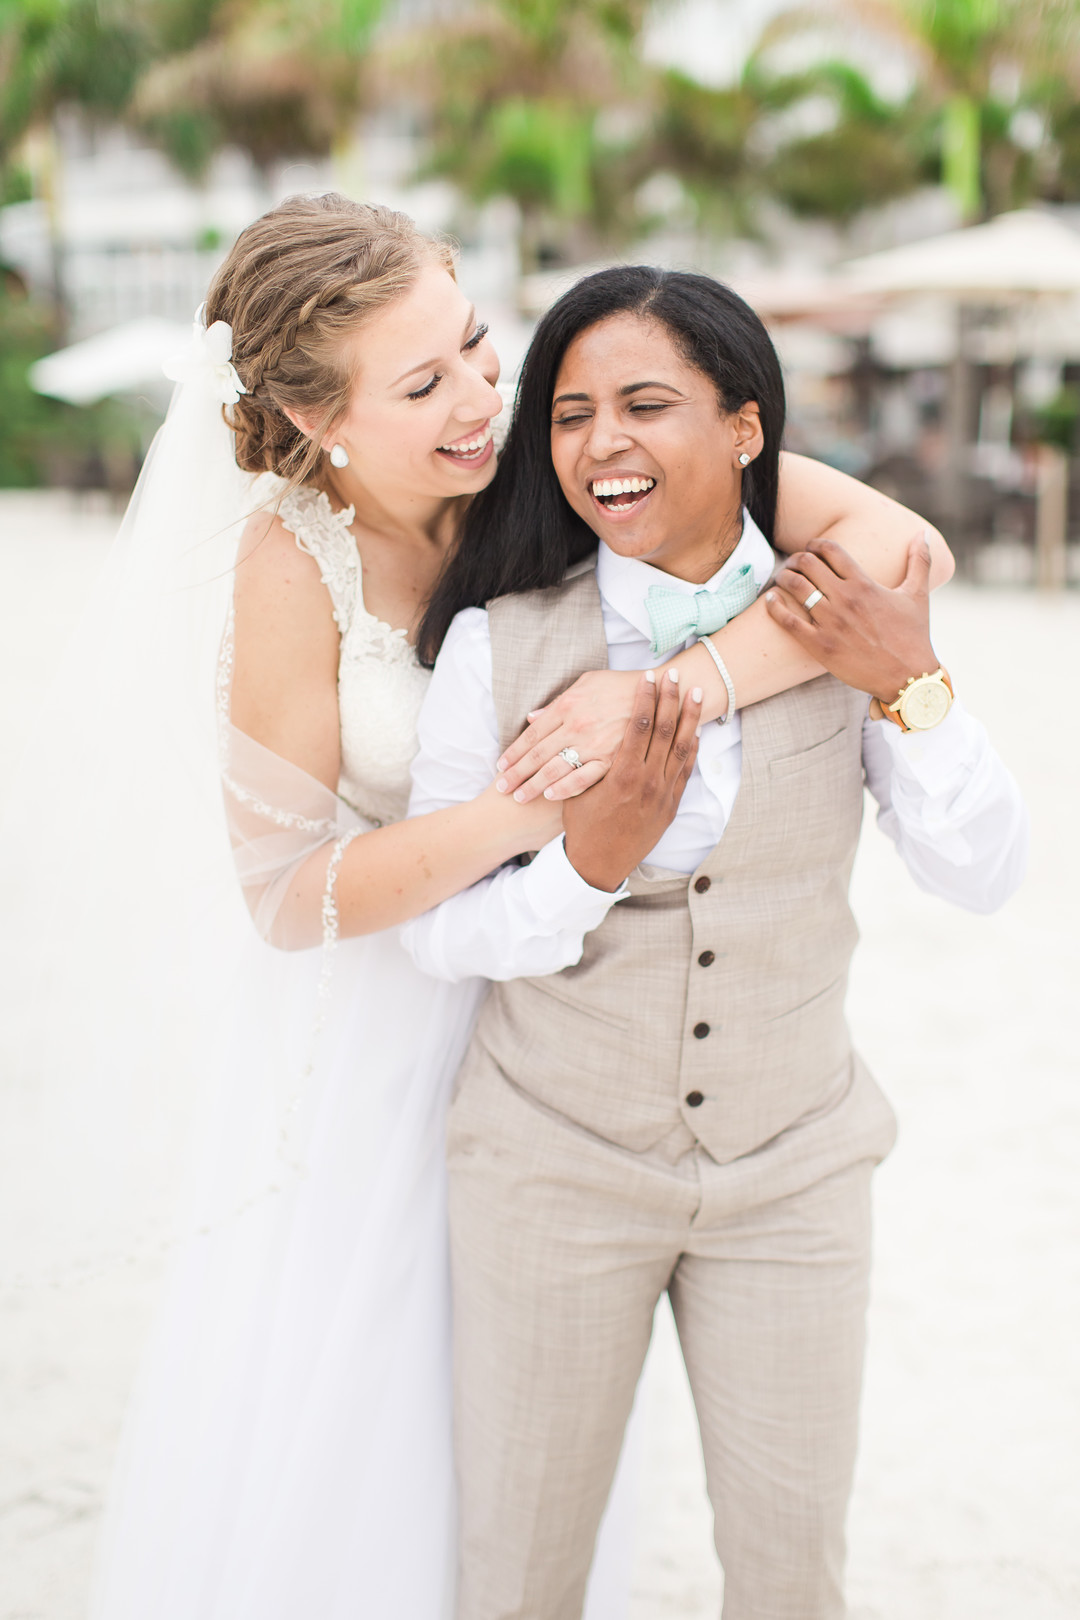 Tropical blue and green beach wedding in St. Petersburg, Florida two brides lesbian wedding white dress tan suit destination LGBTQ+ weddings laugh